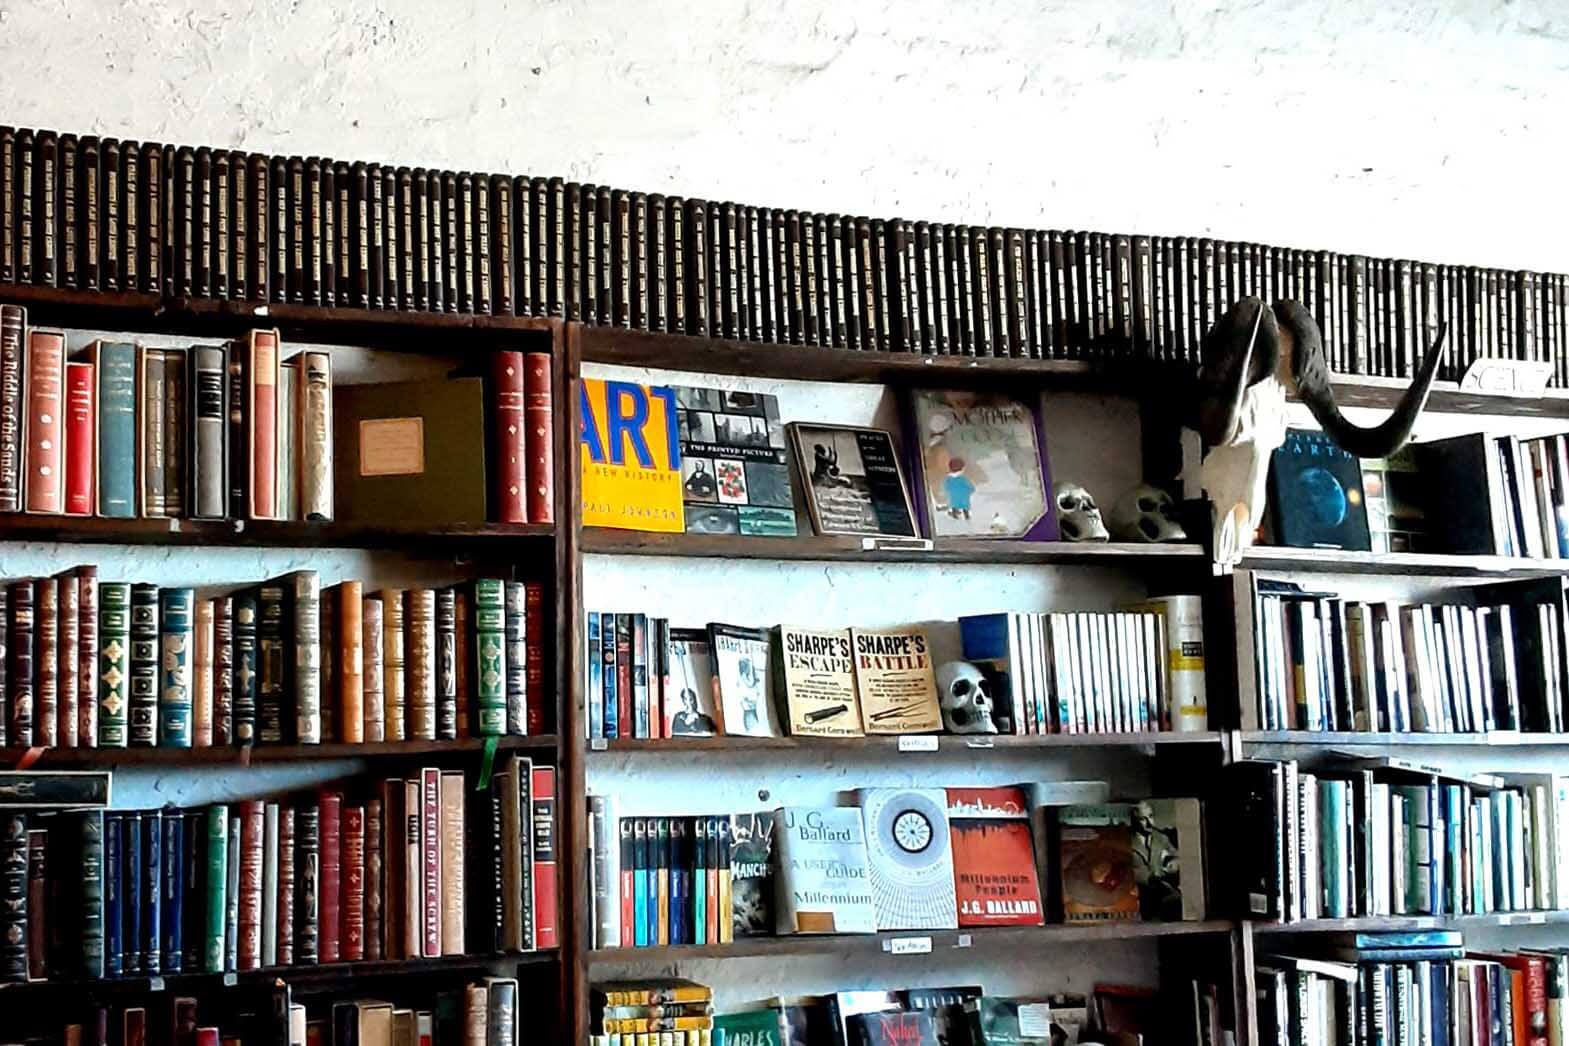 Abraxas Books on the shelf.